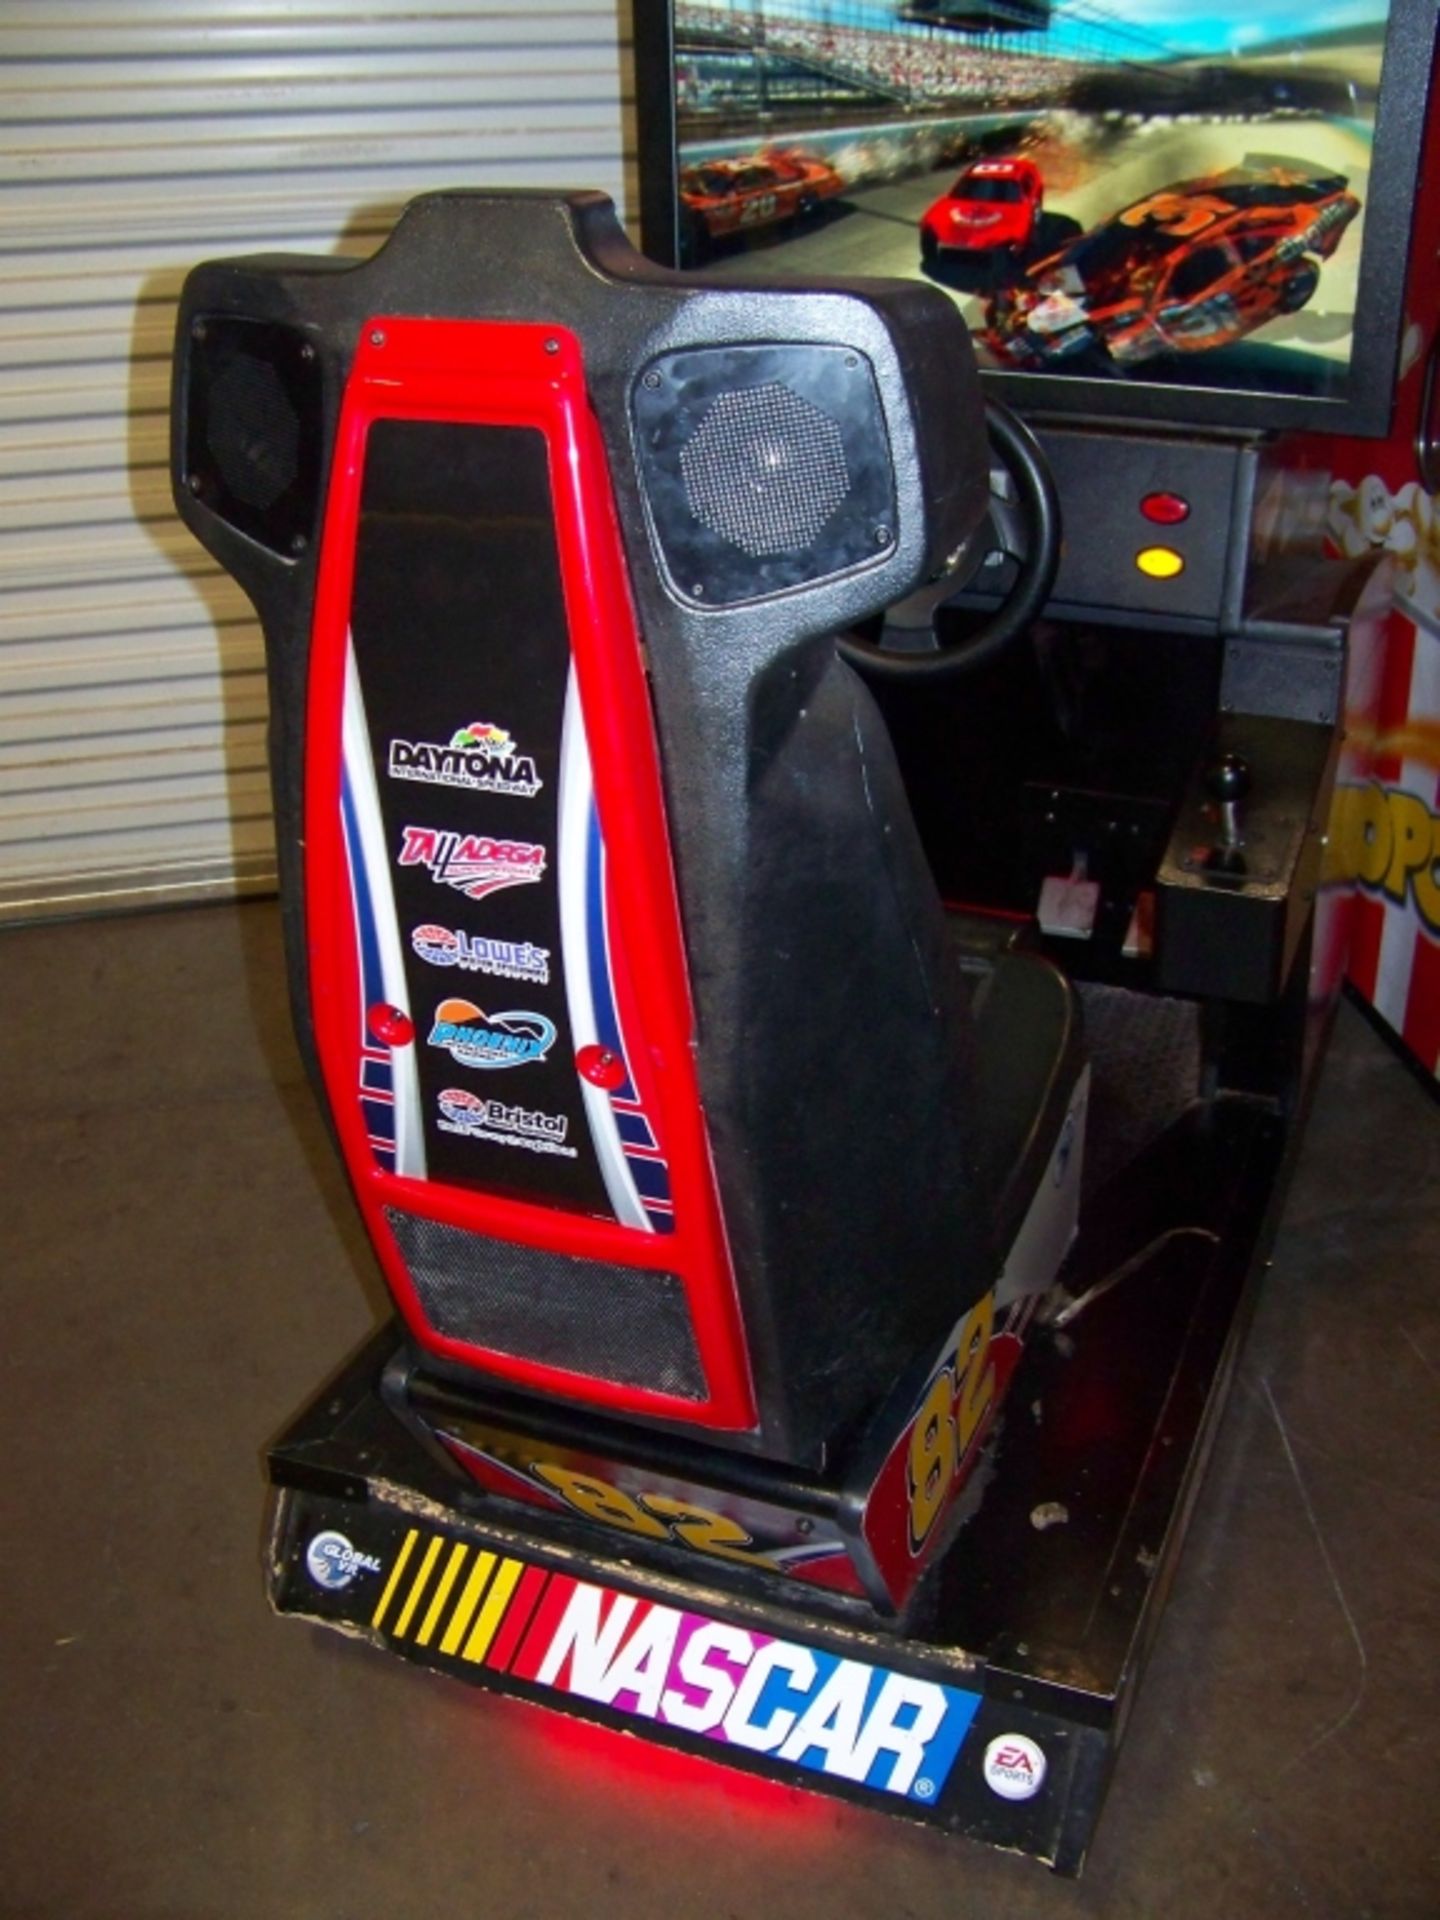 NASCAR RACING ARCADE GAME GLOBAL VR 32" LCD - Image 7 of 7